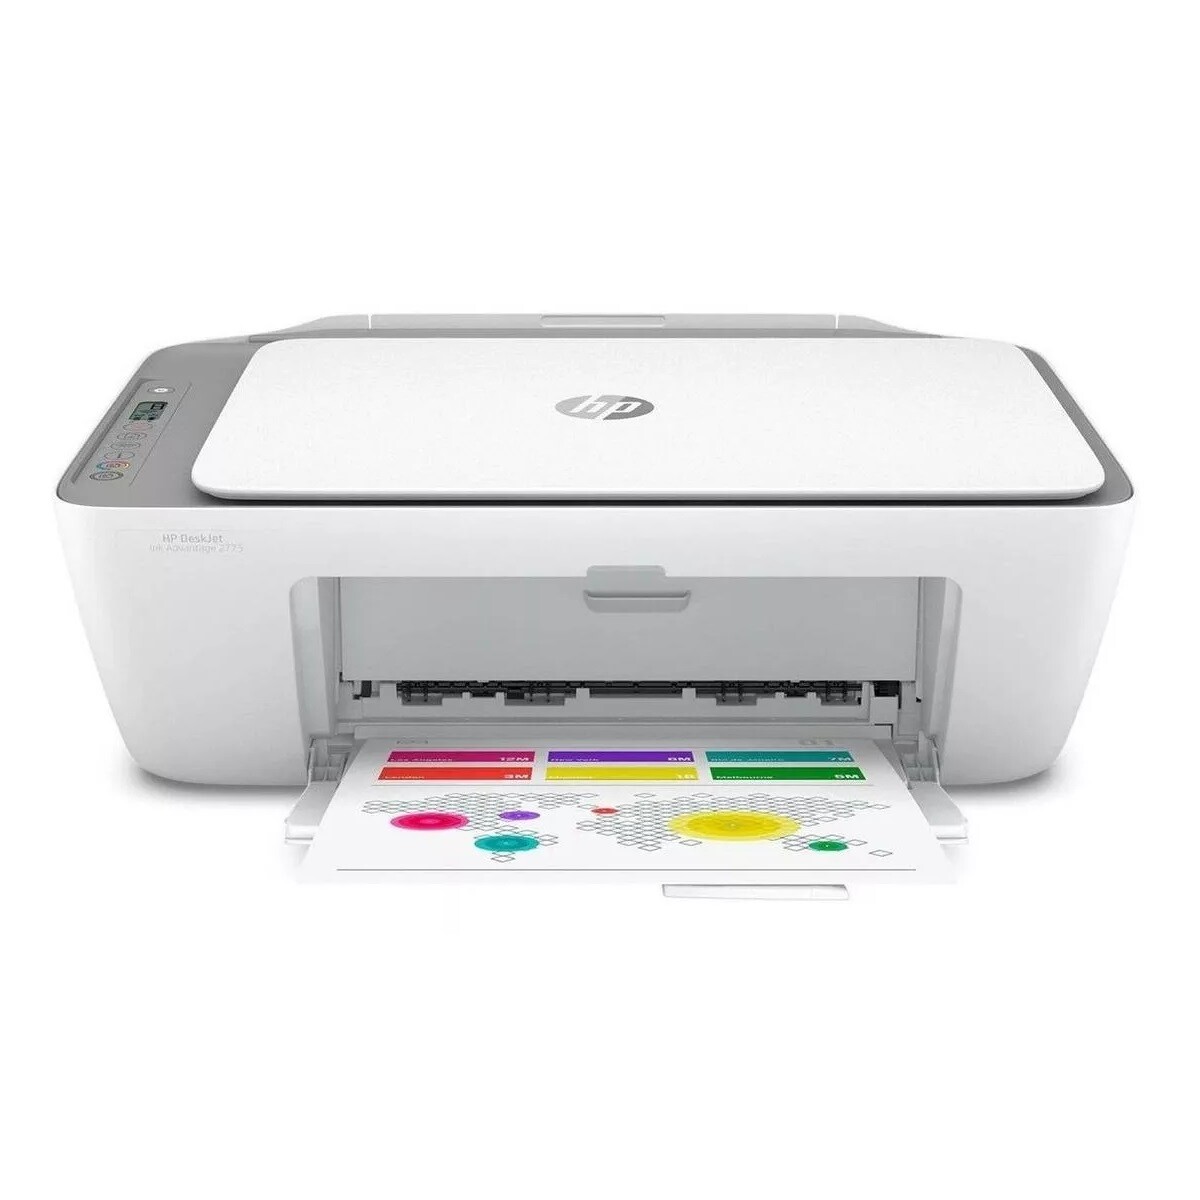 OUTLET - Impresora A Color Multifunción HP Deskjet 2775 Con Wifi 